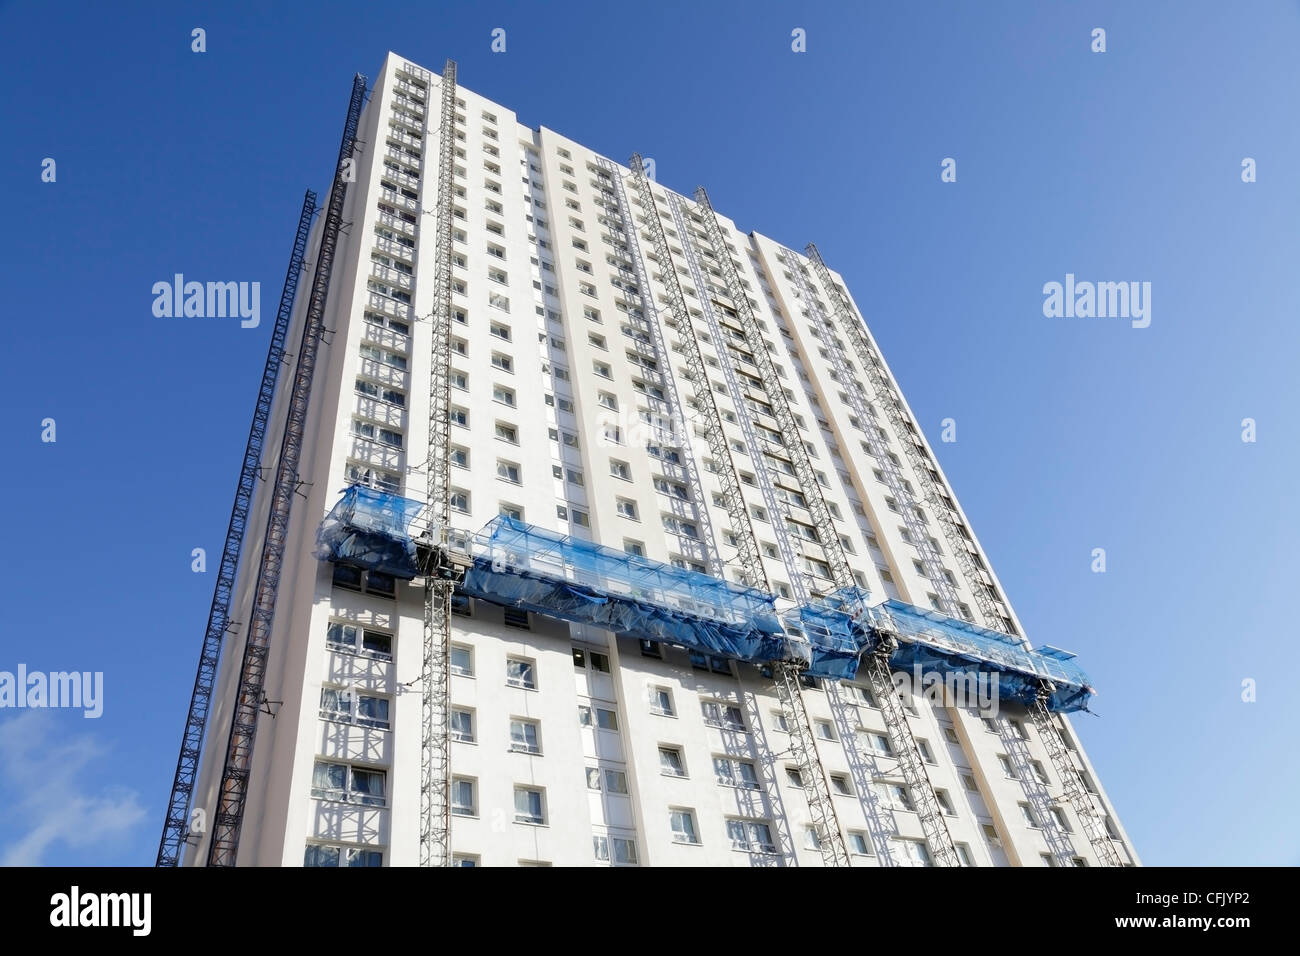 Housing tower block being refurbished in Glasgow, Scotland, UK Stock Photo